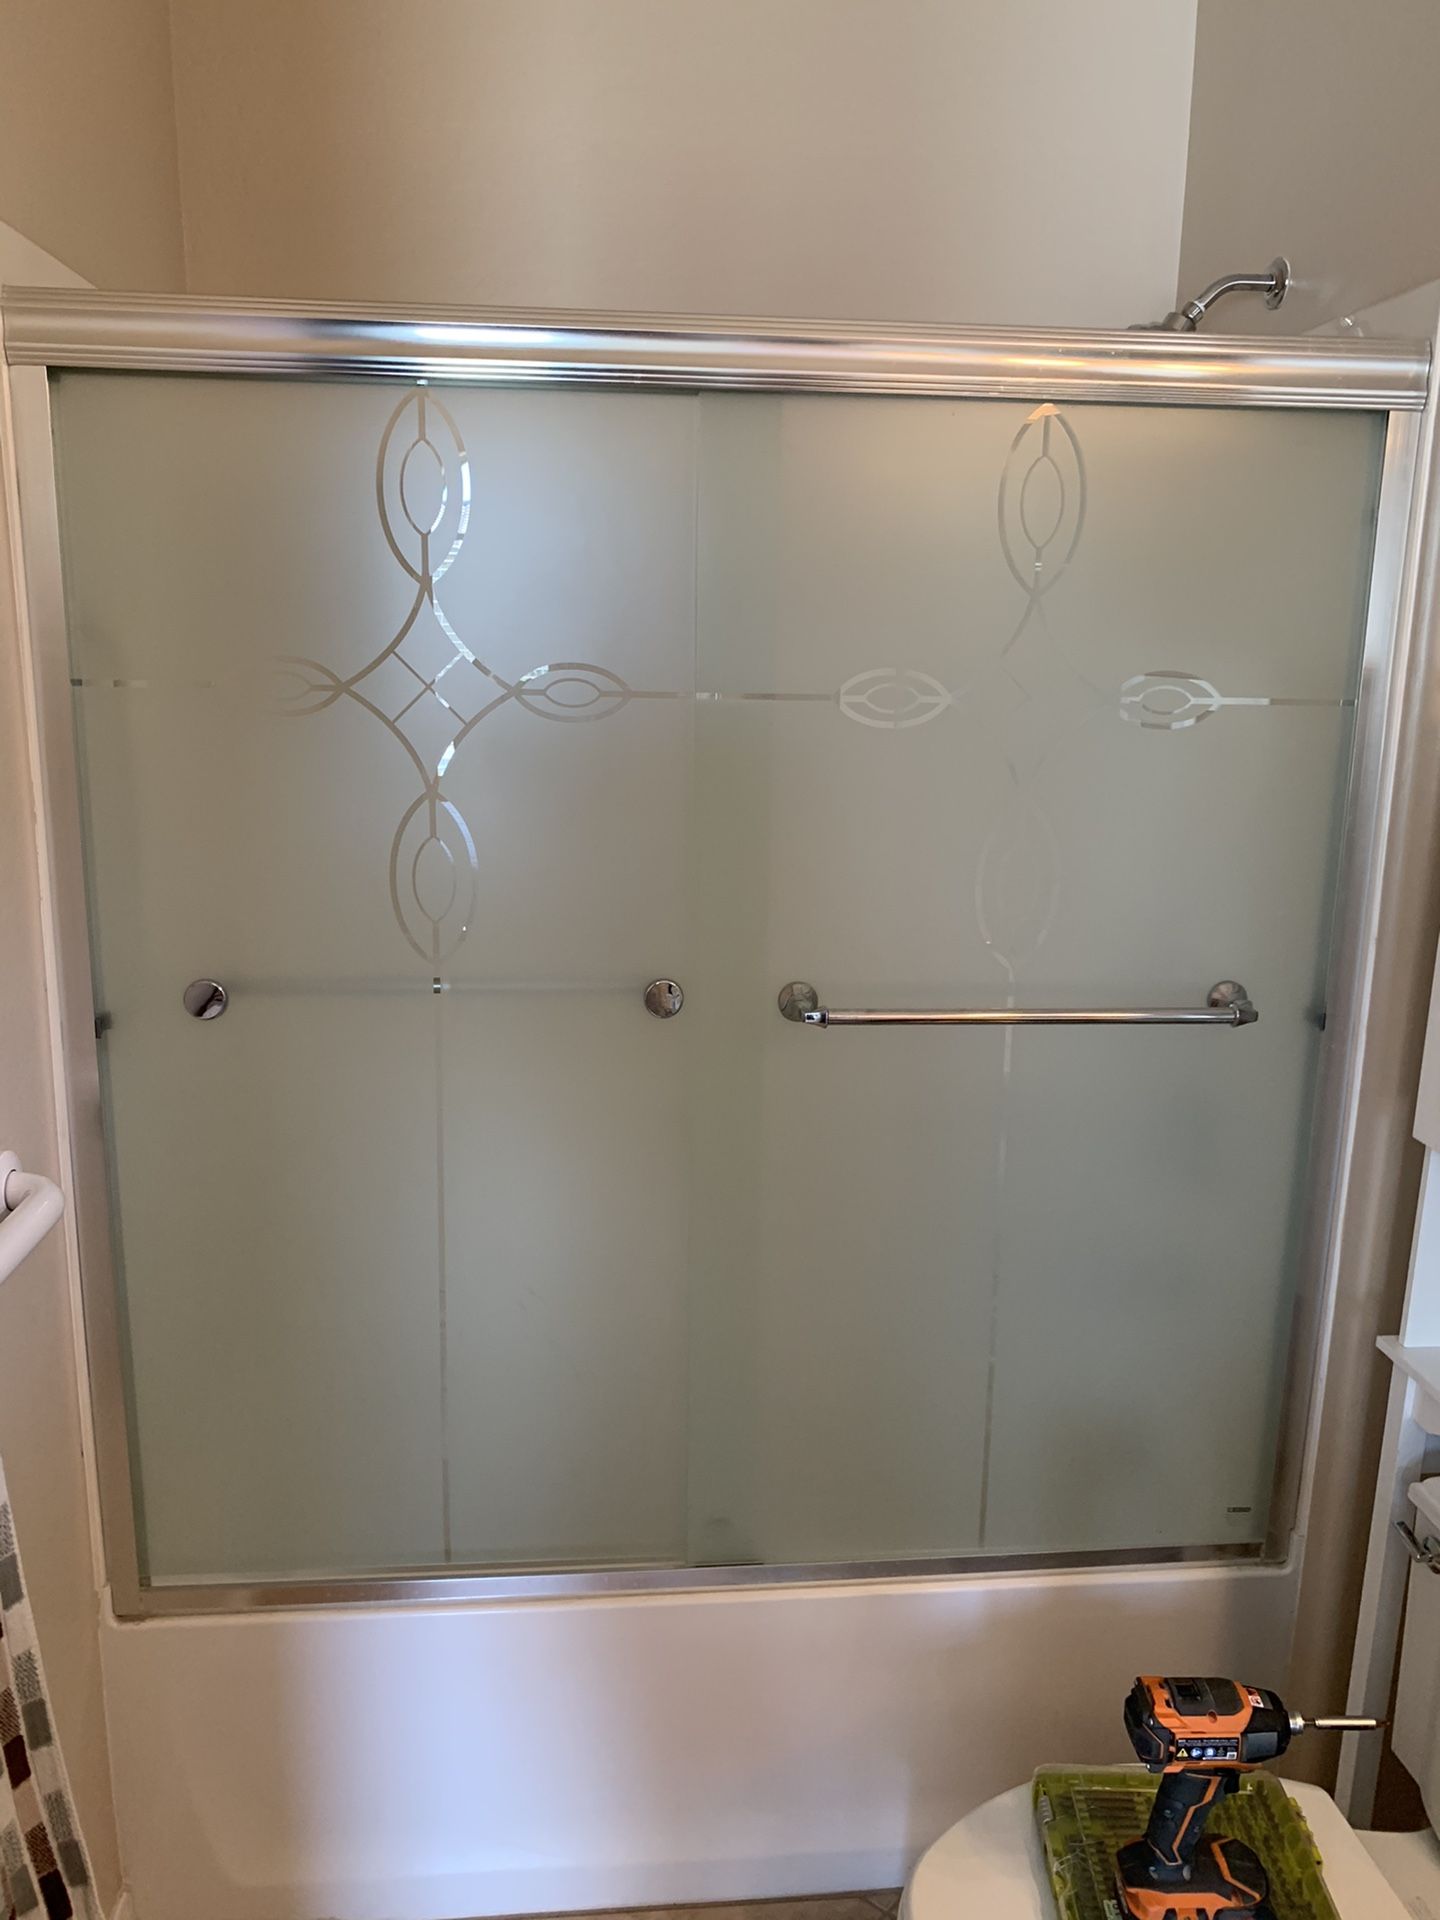 Tub sliding glass door 58”w x 58 1/2” h